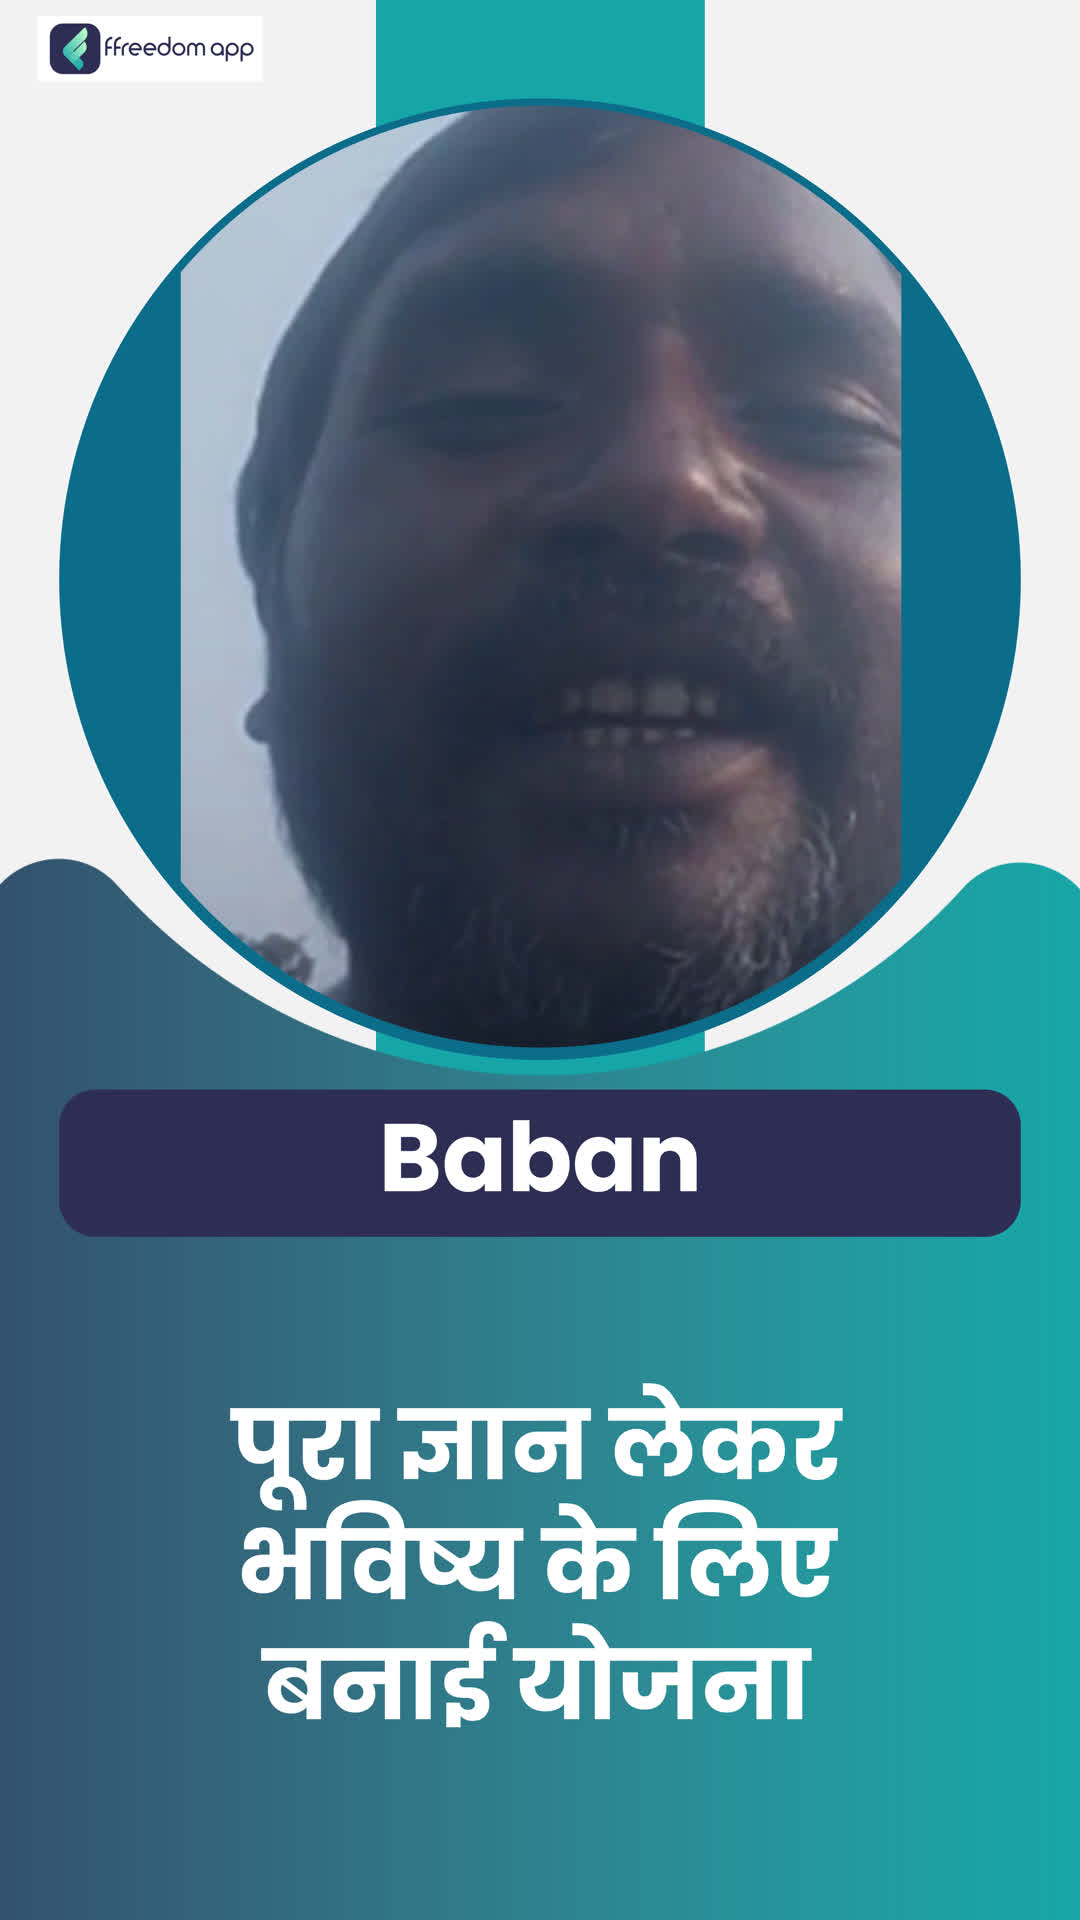 Baba vali 's Honest Review of ffreedom app - Kadapa - YSR - Cuddapah ,Telangana